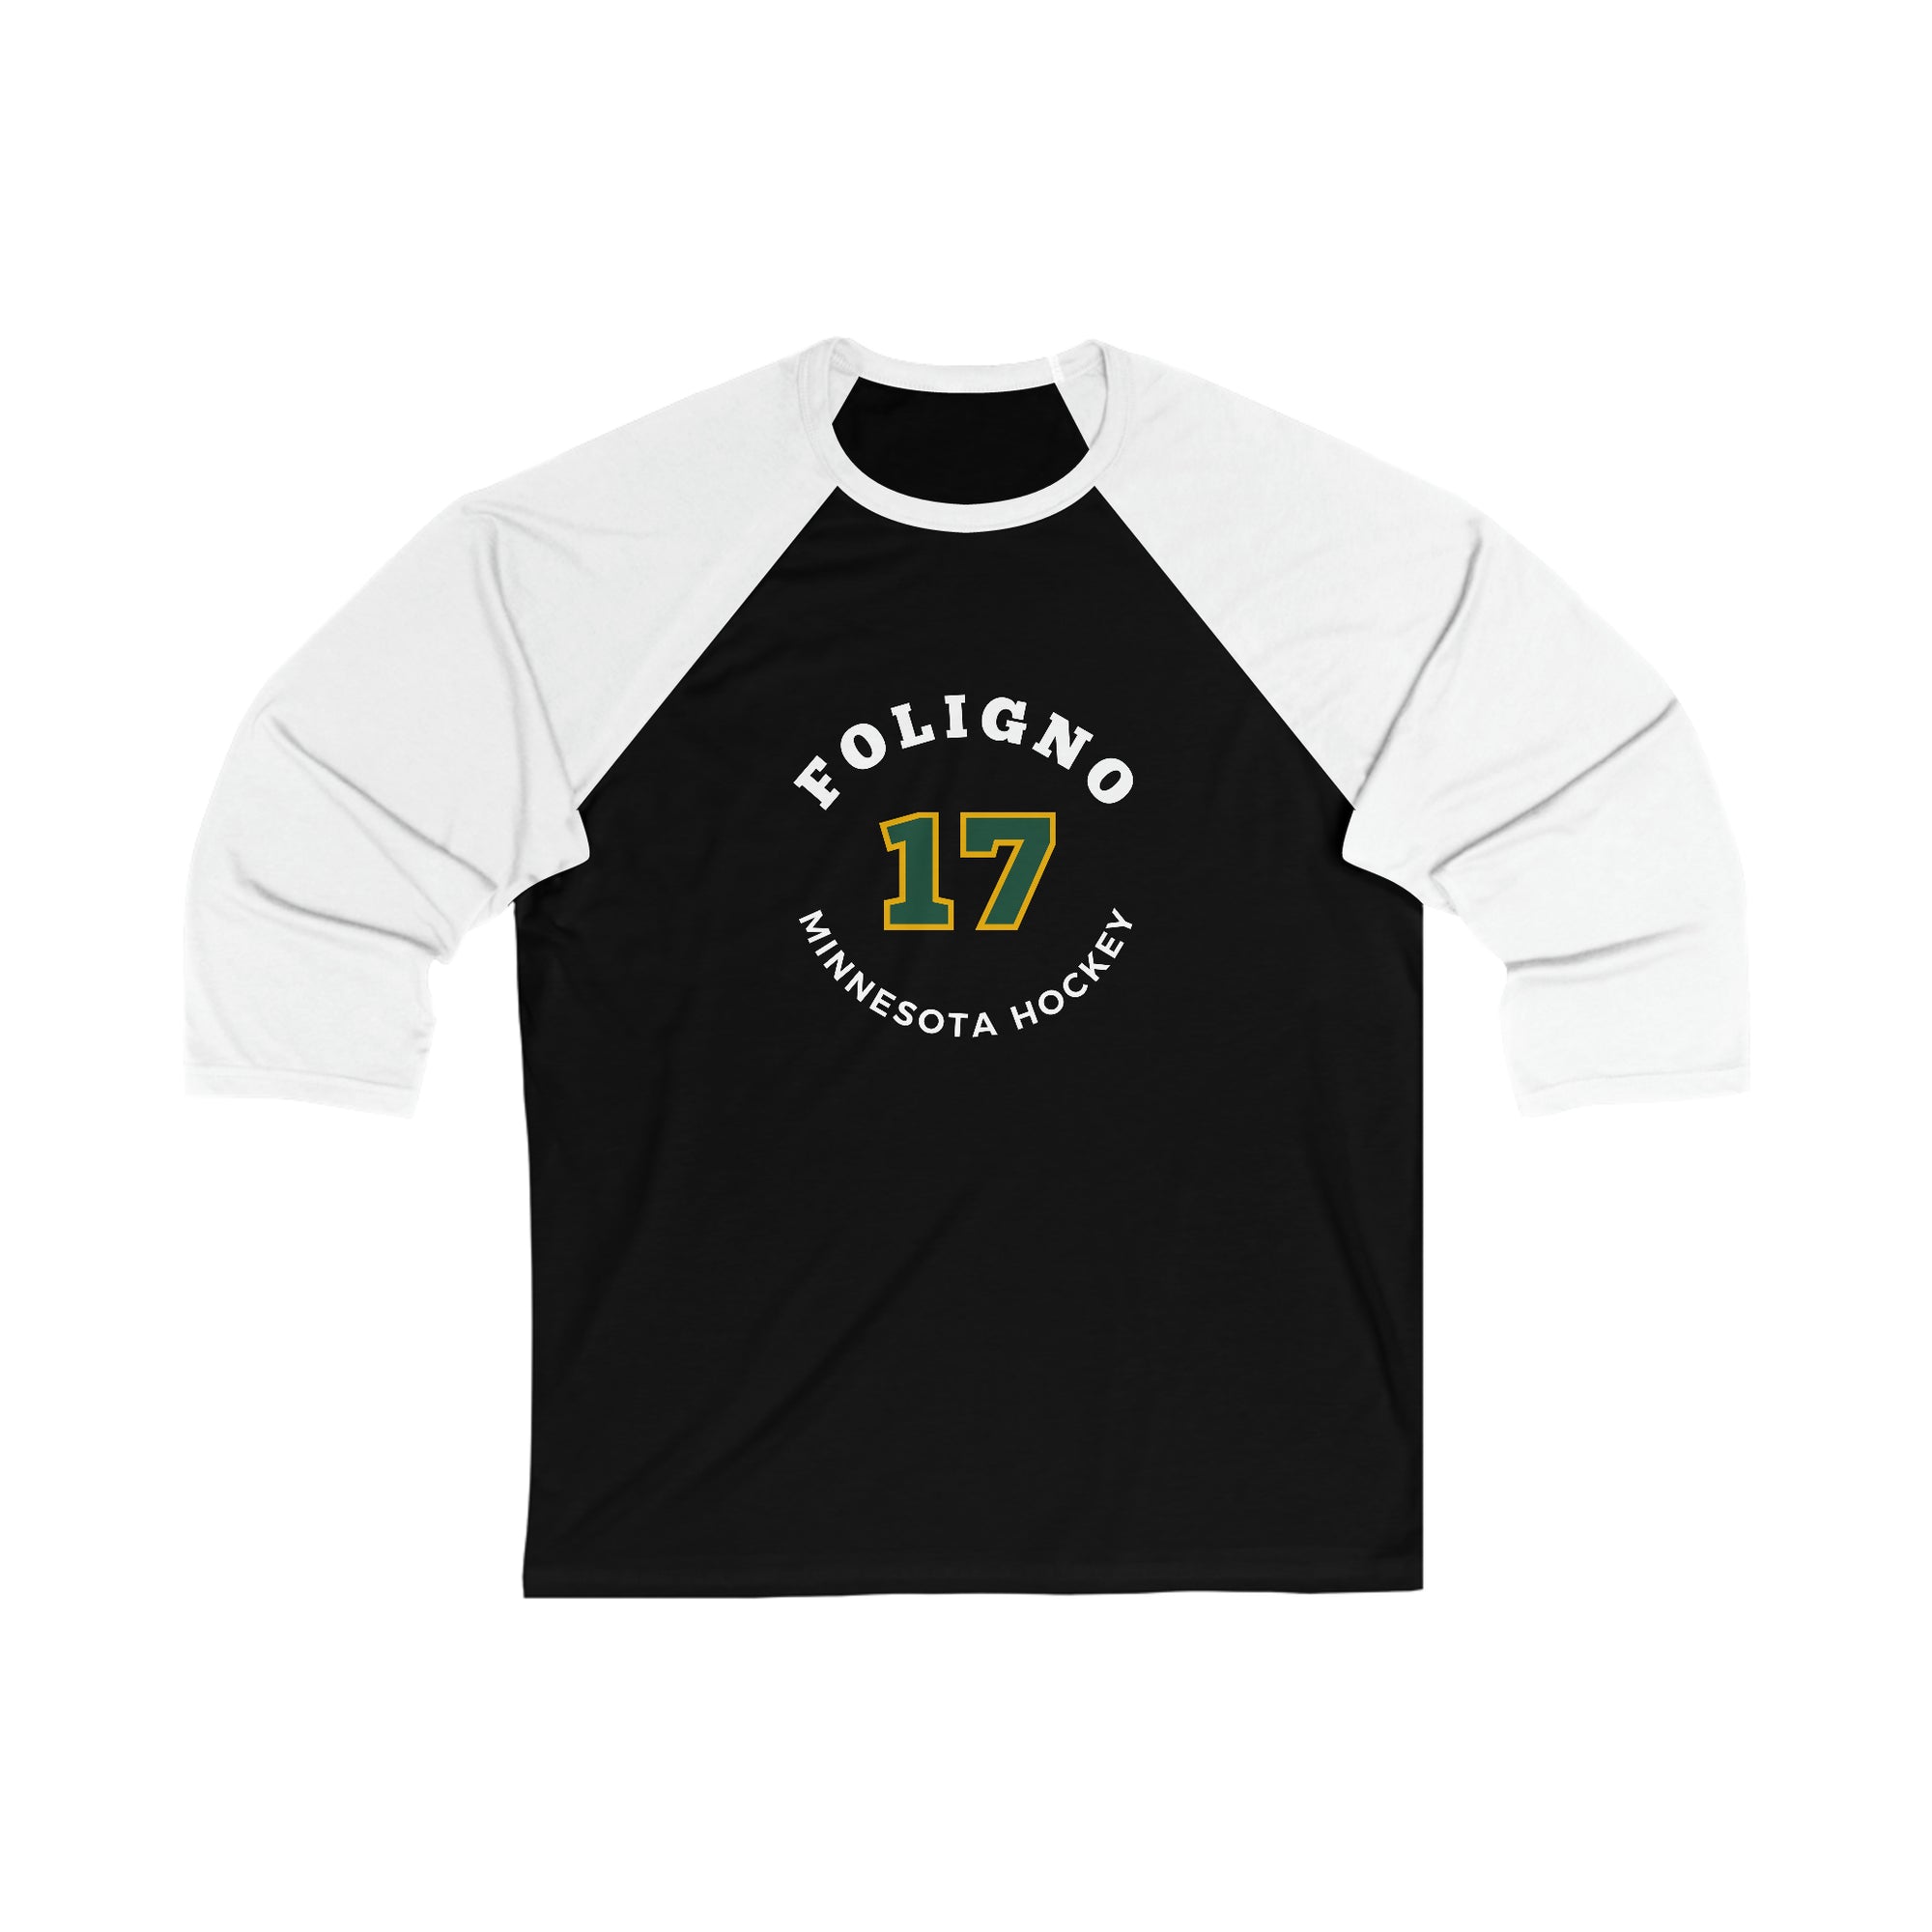 Foligno 17 Minnesota Hockey Number Arch Design Unisex Tri-Blend 3/4 Sleeve Raglan Baseball Shirt